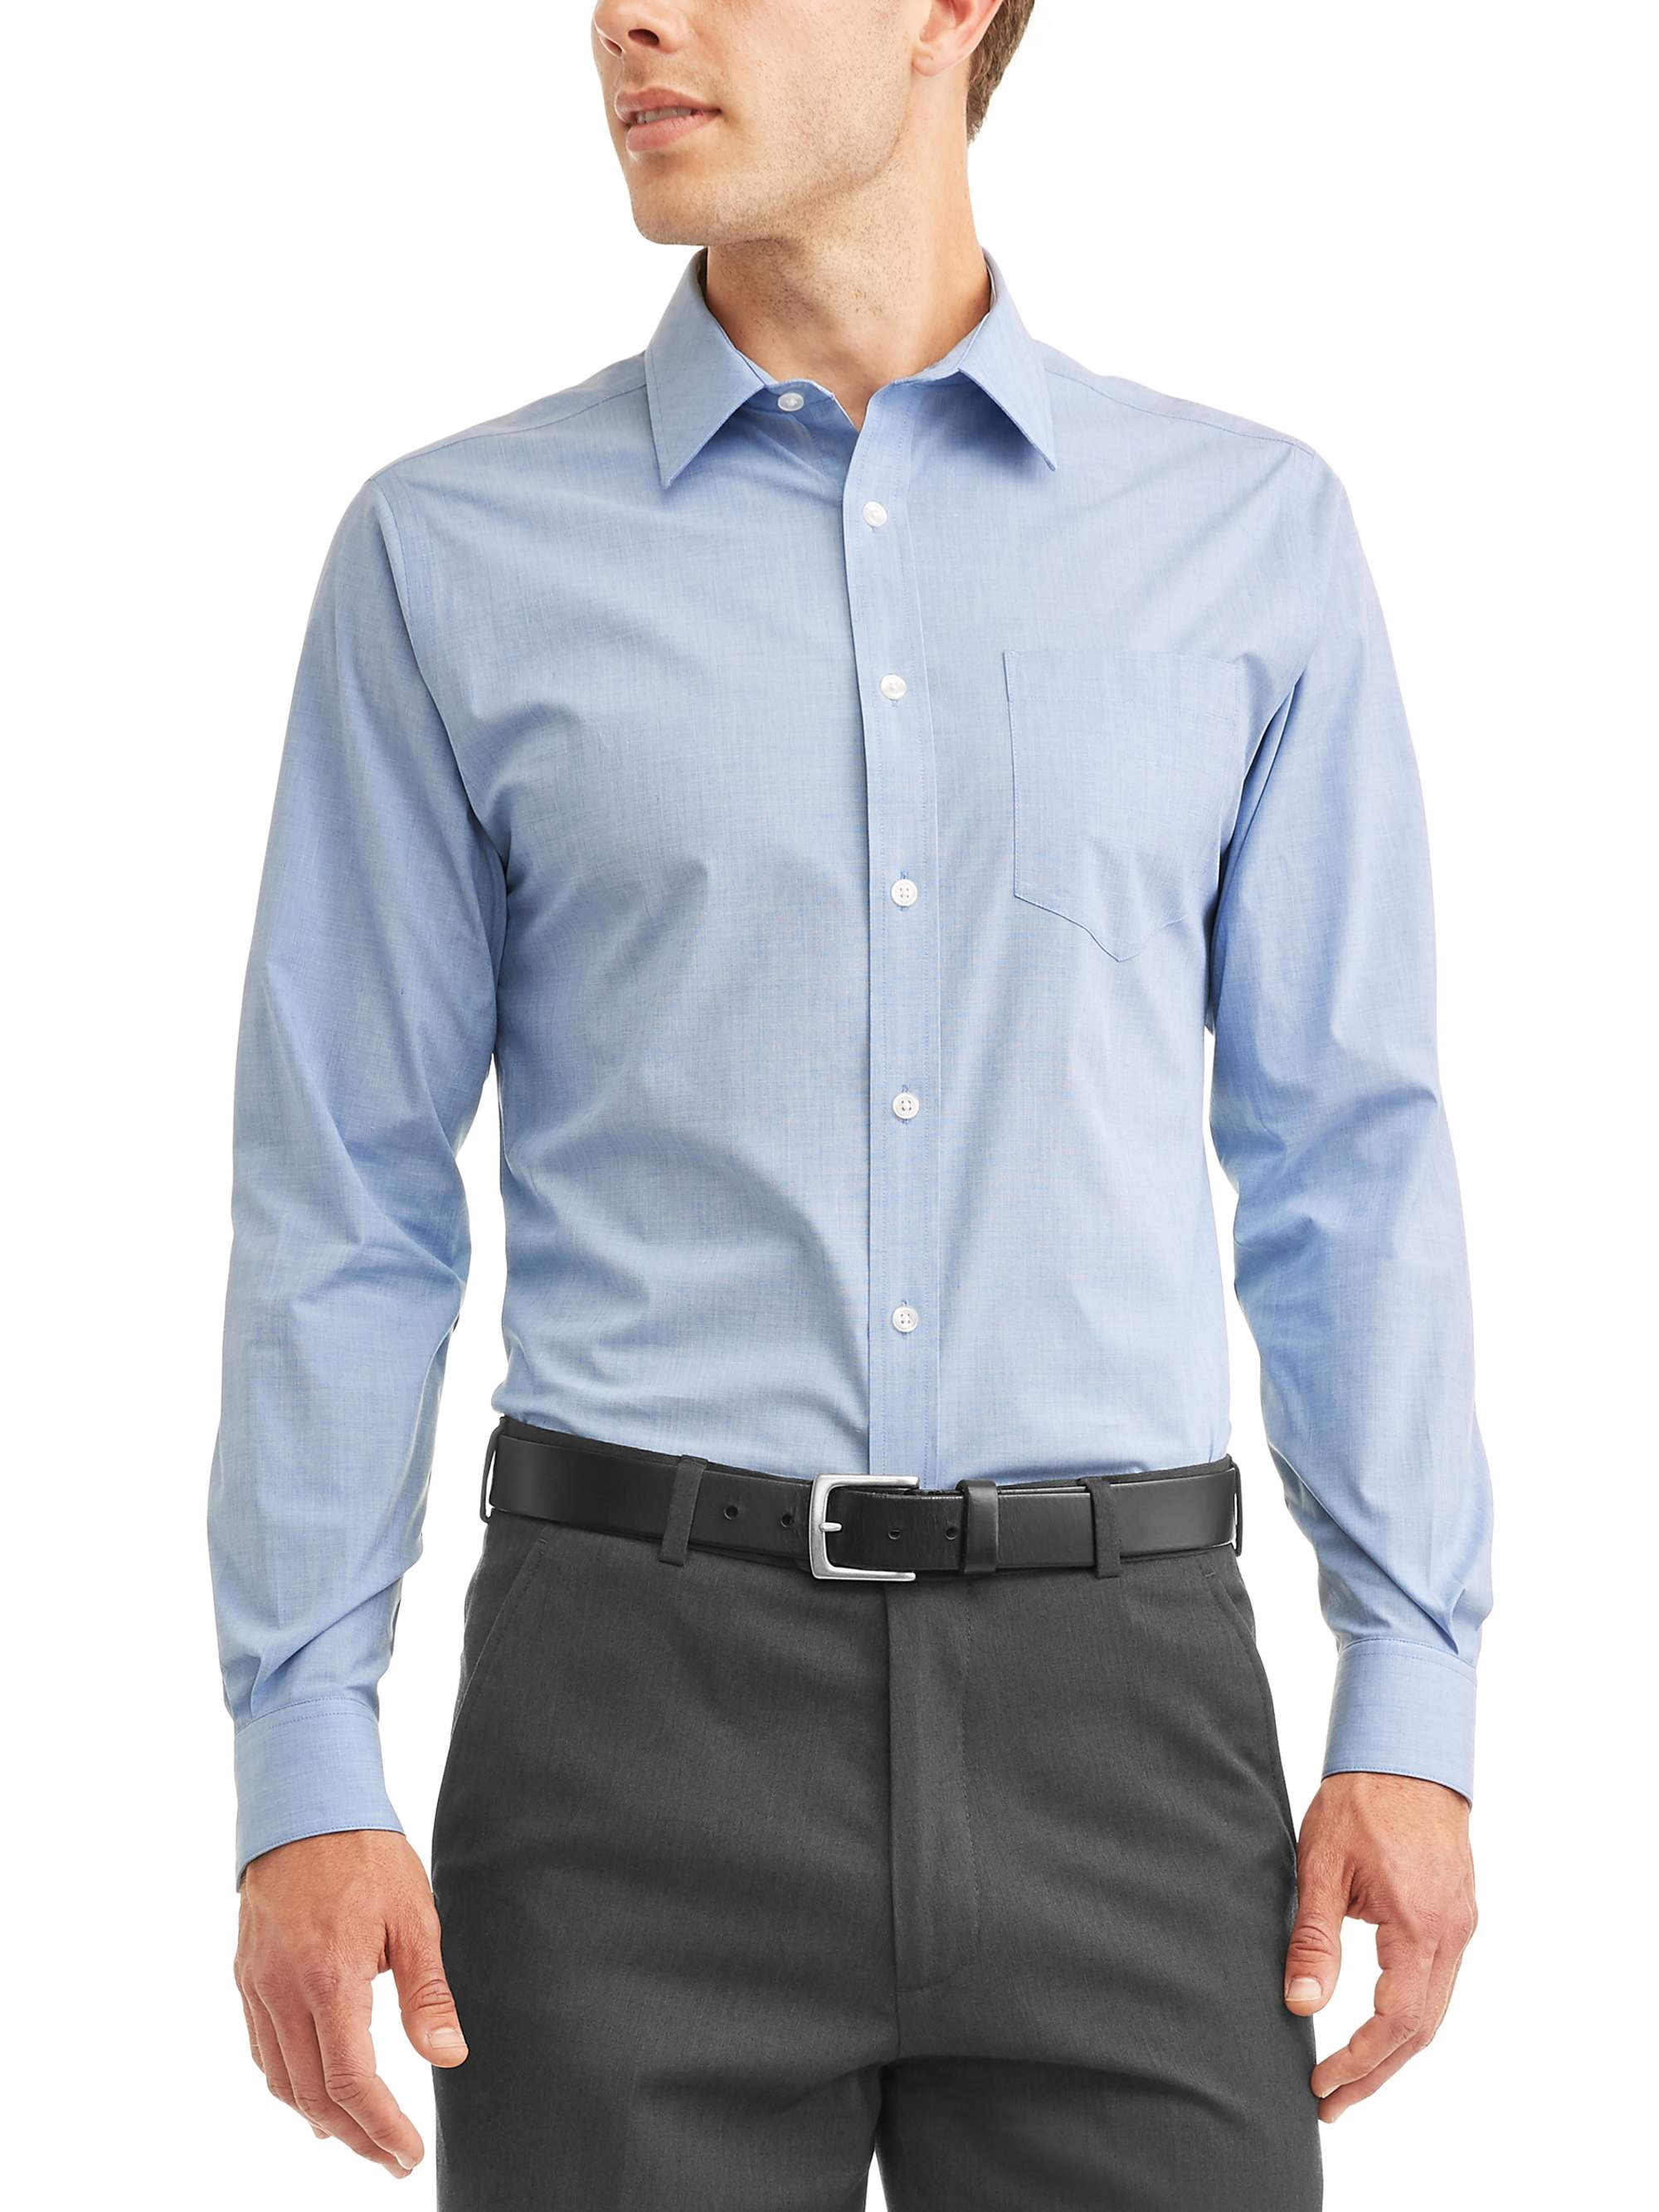 Ed Garment MenS Long Sleeve Non Iron Dress Shirt-French Blue-L-33